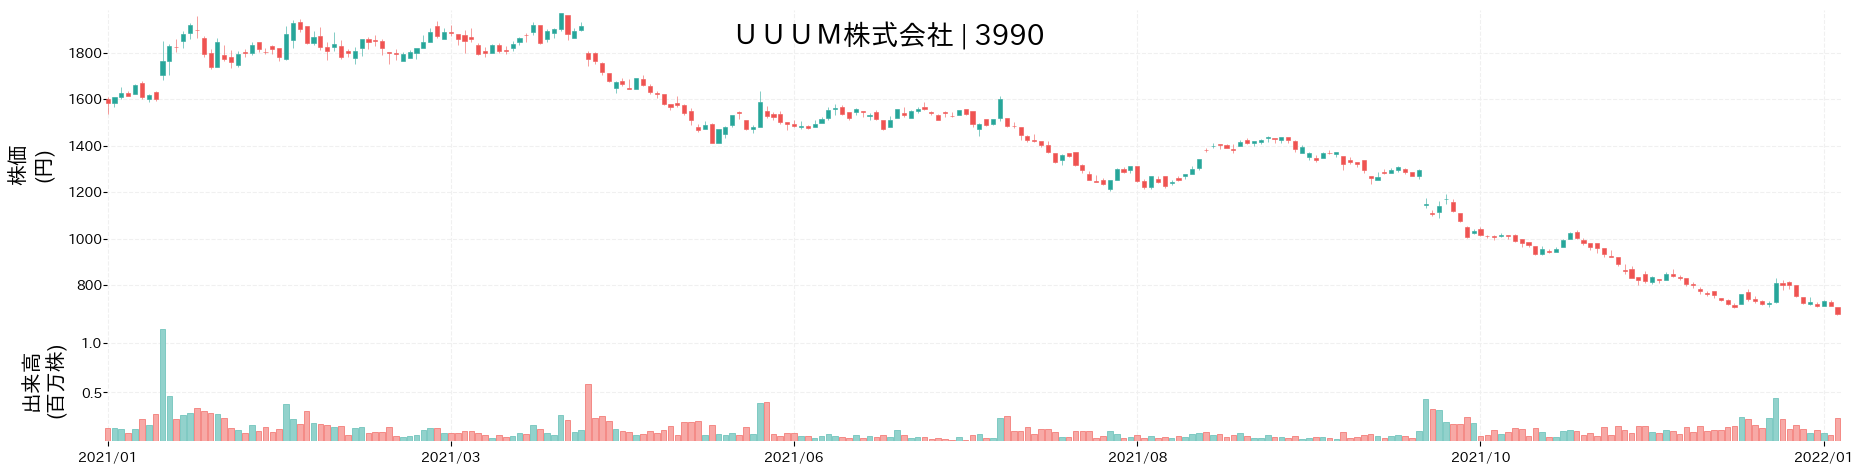 UUUMの株価推移(2021)